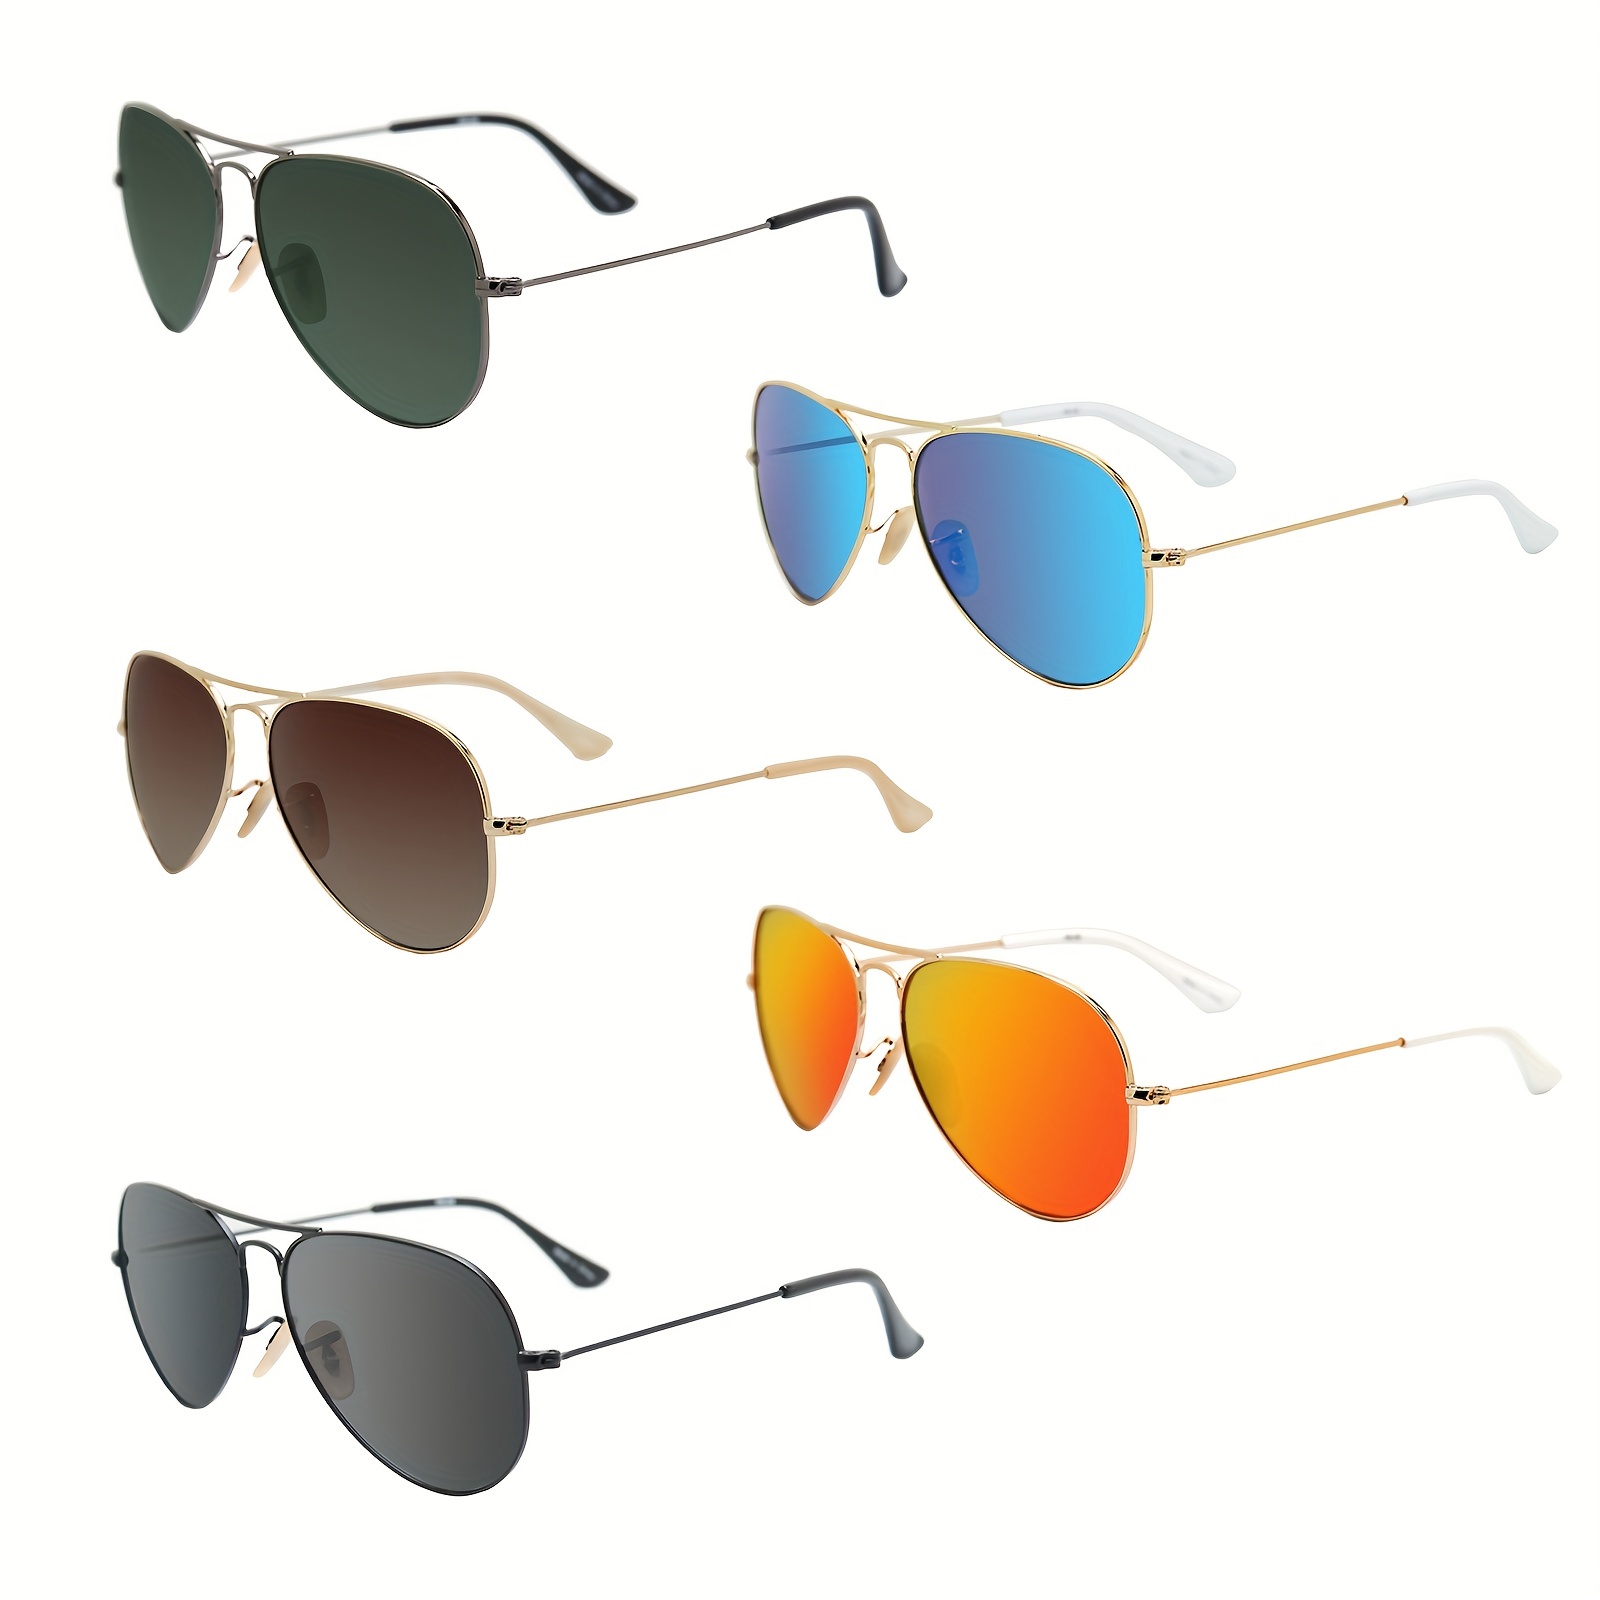 1pc Mens Classic Sunglasses For Men Driving Sunglasses Polarized